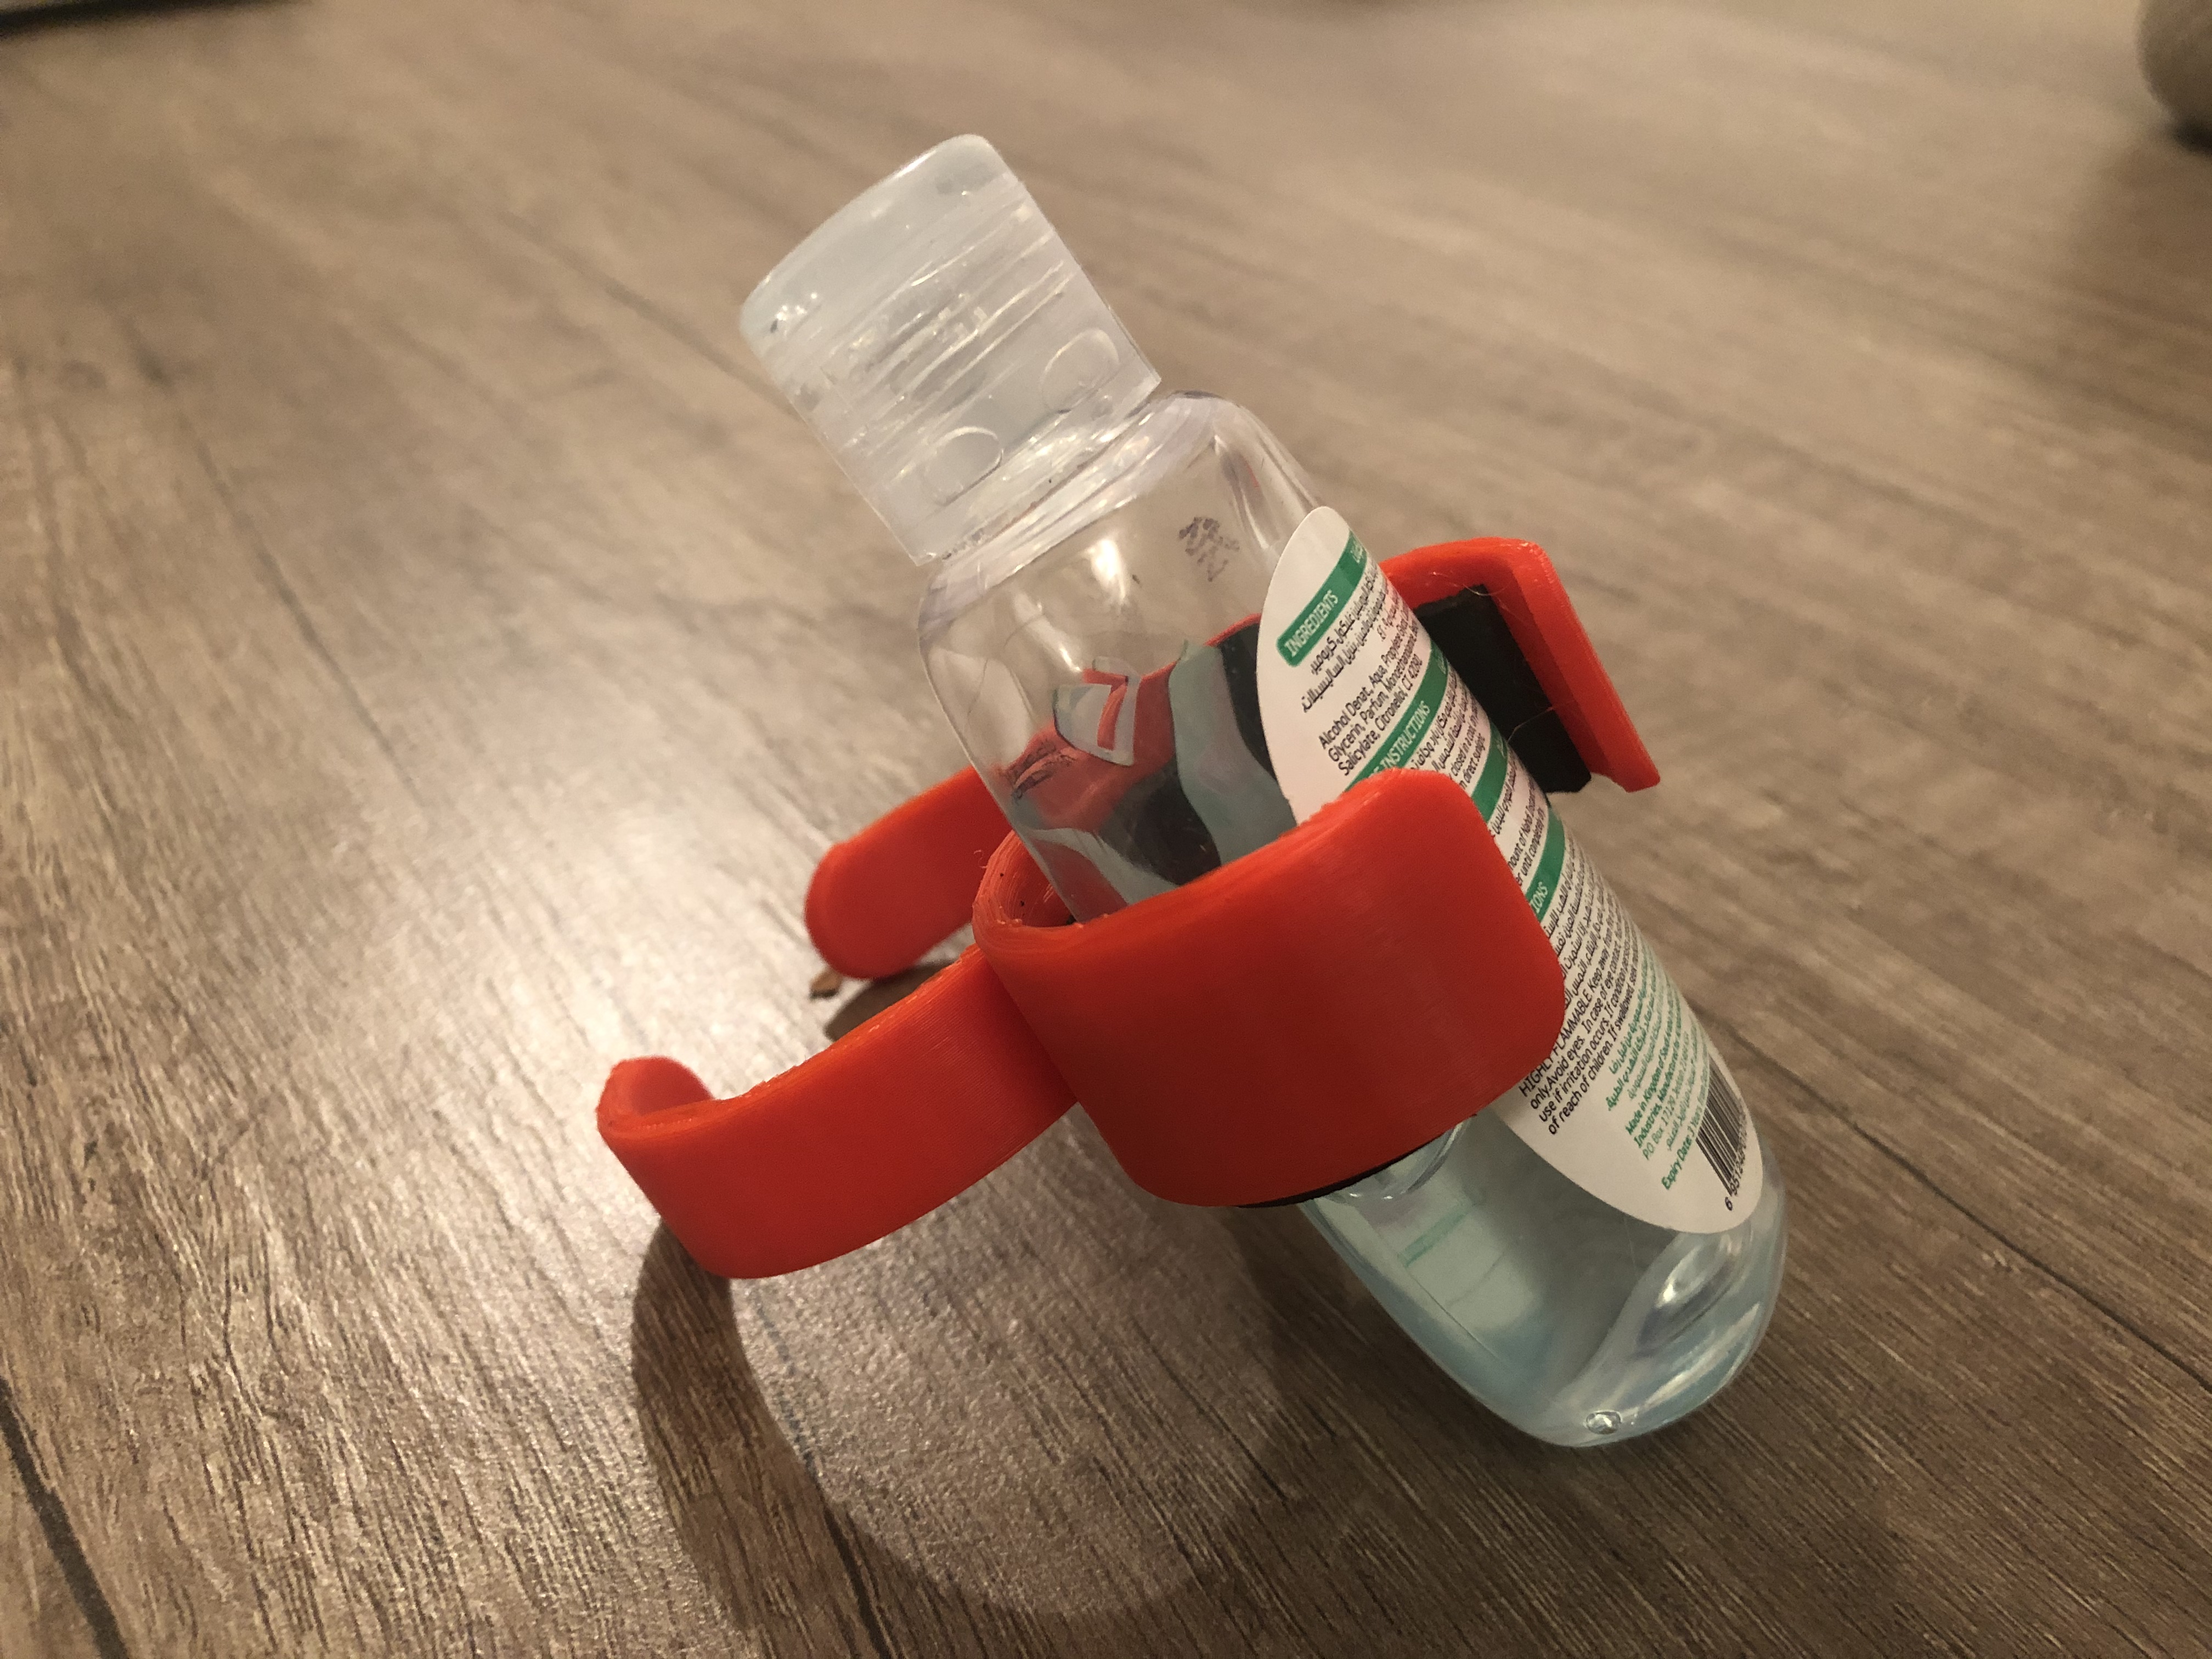 3D printed hand sanitizer clasp. Photo via Moath Abuaysha.